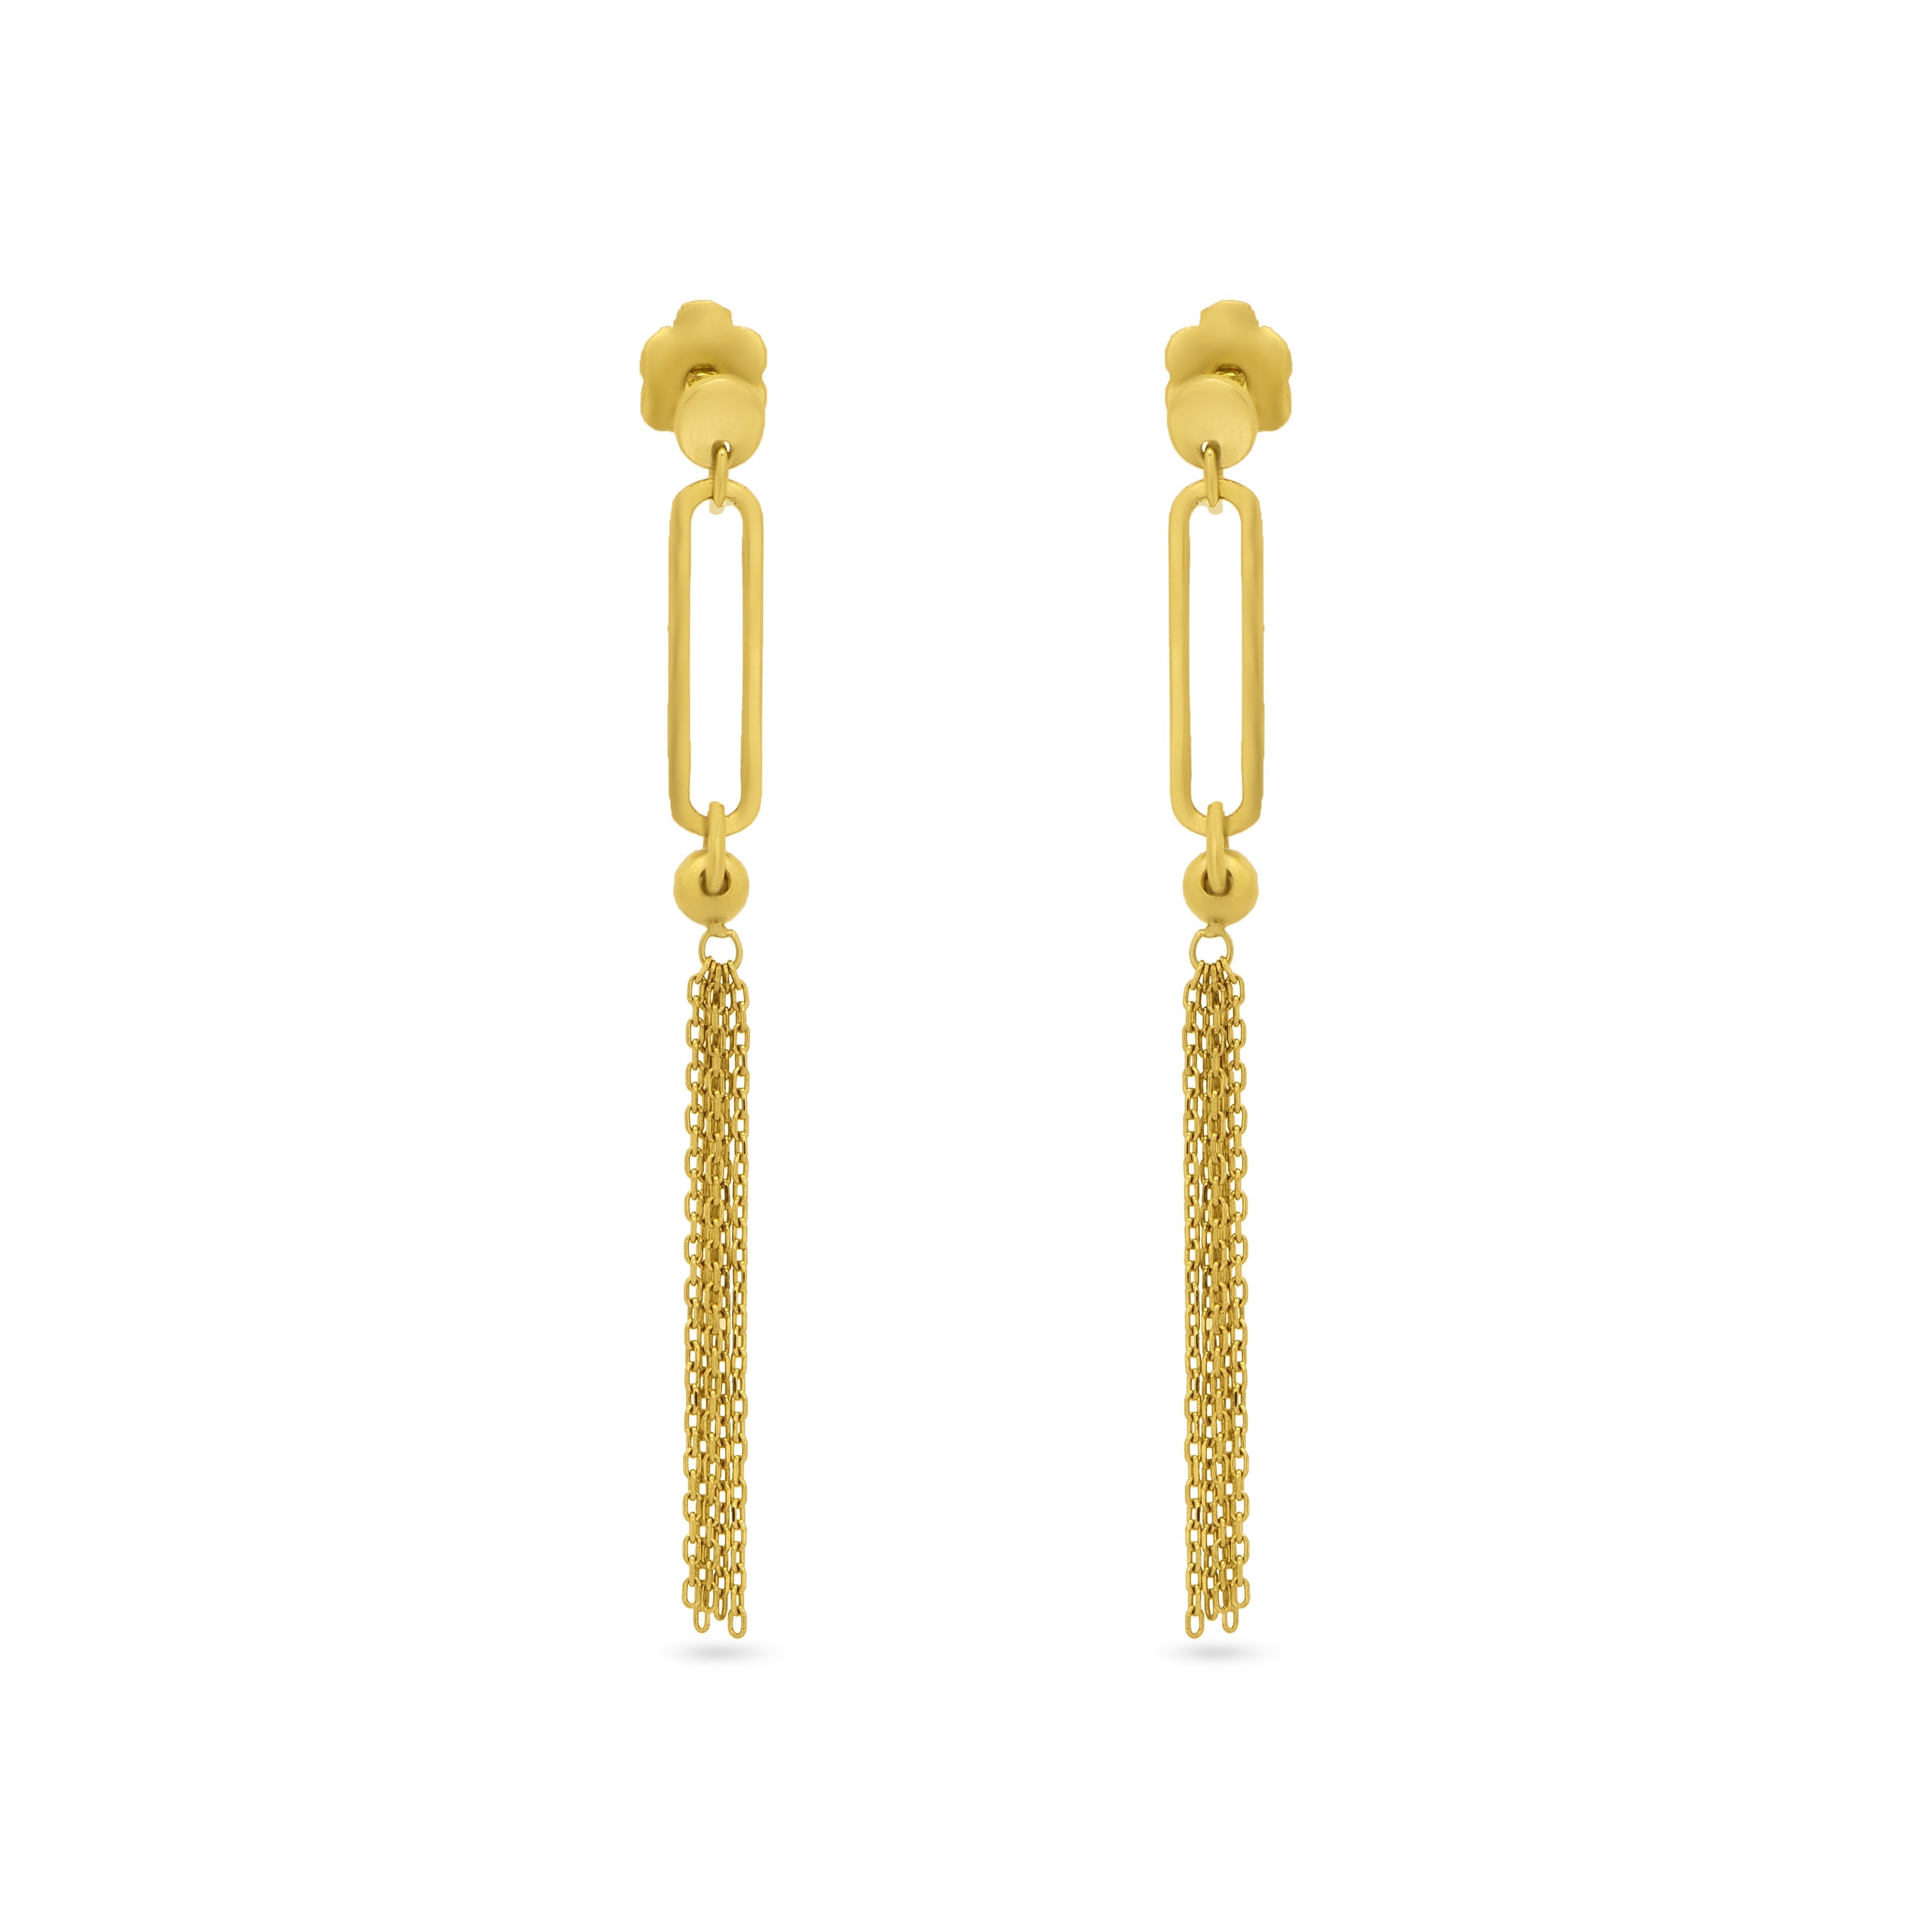 Unique Dangling Golden Clip Earring in Yellow 18 K Gold - S-EN083G/R/WG